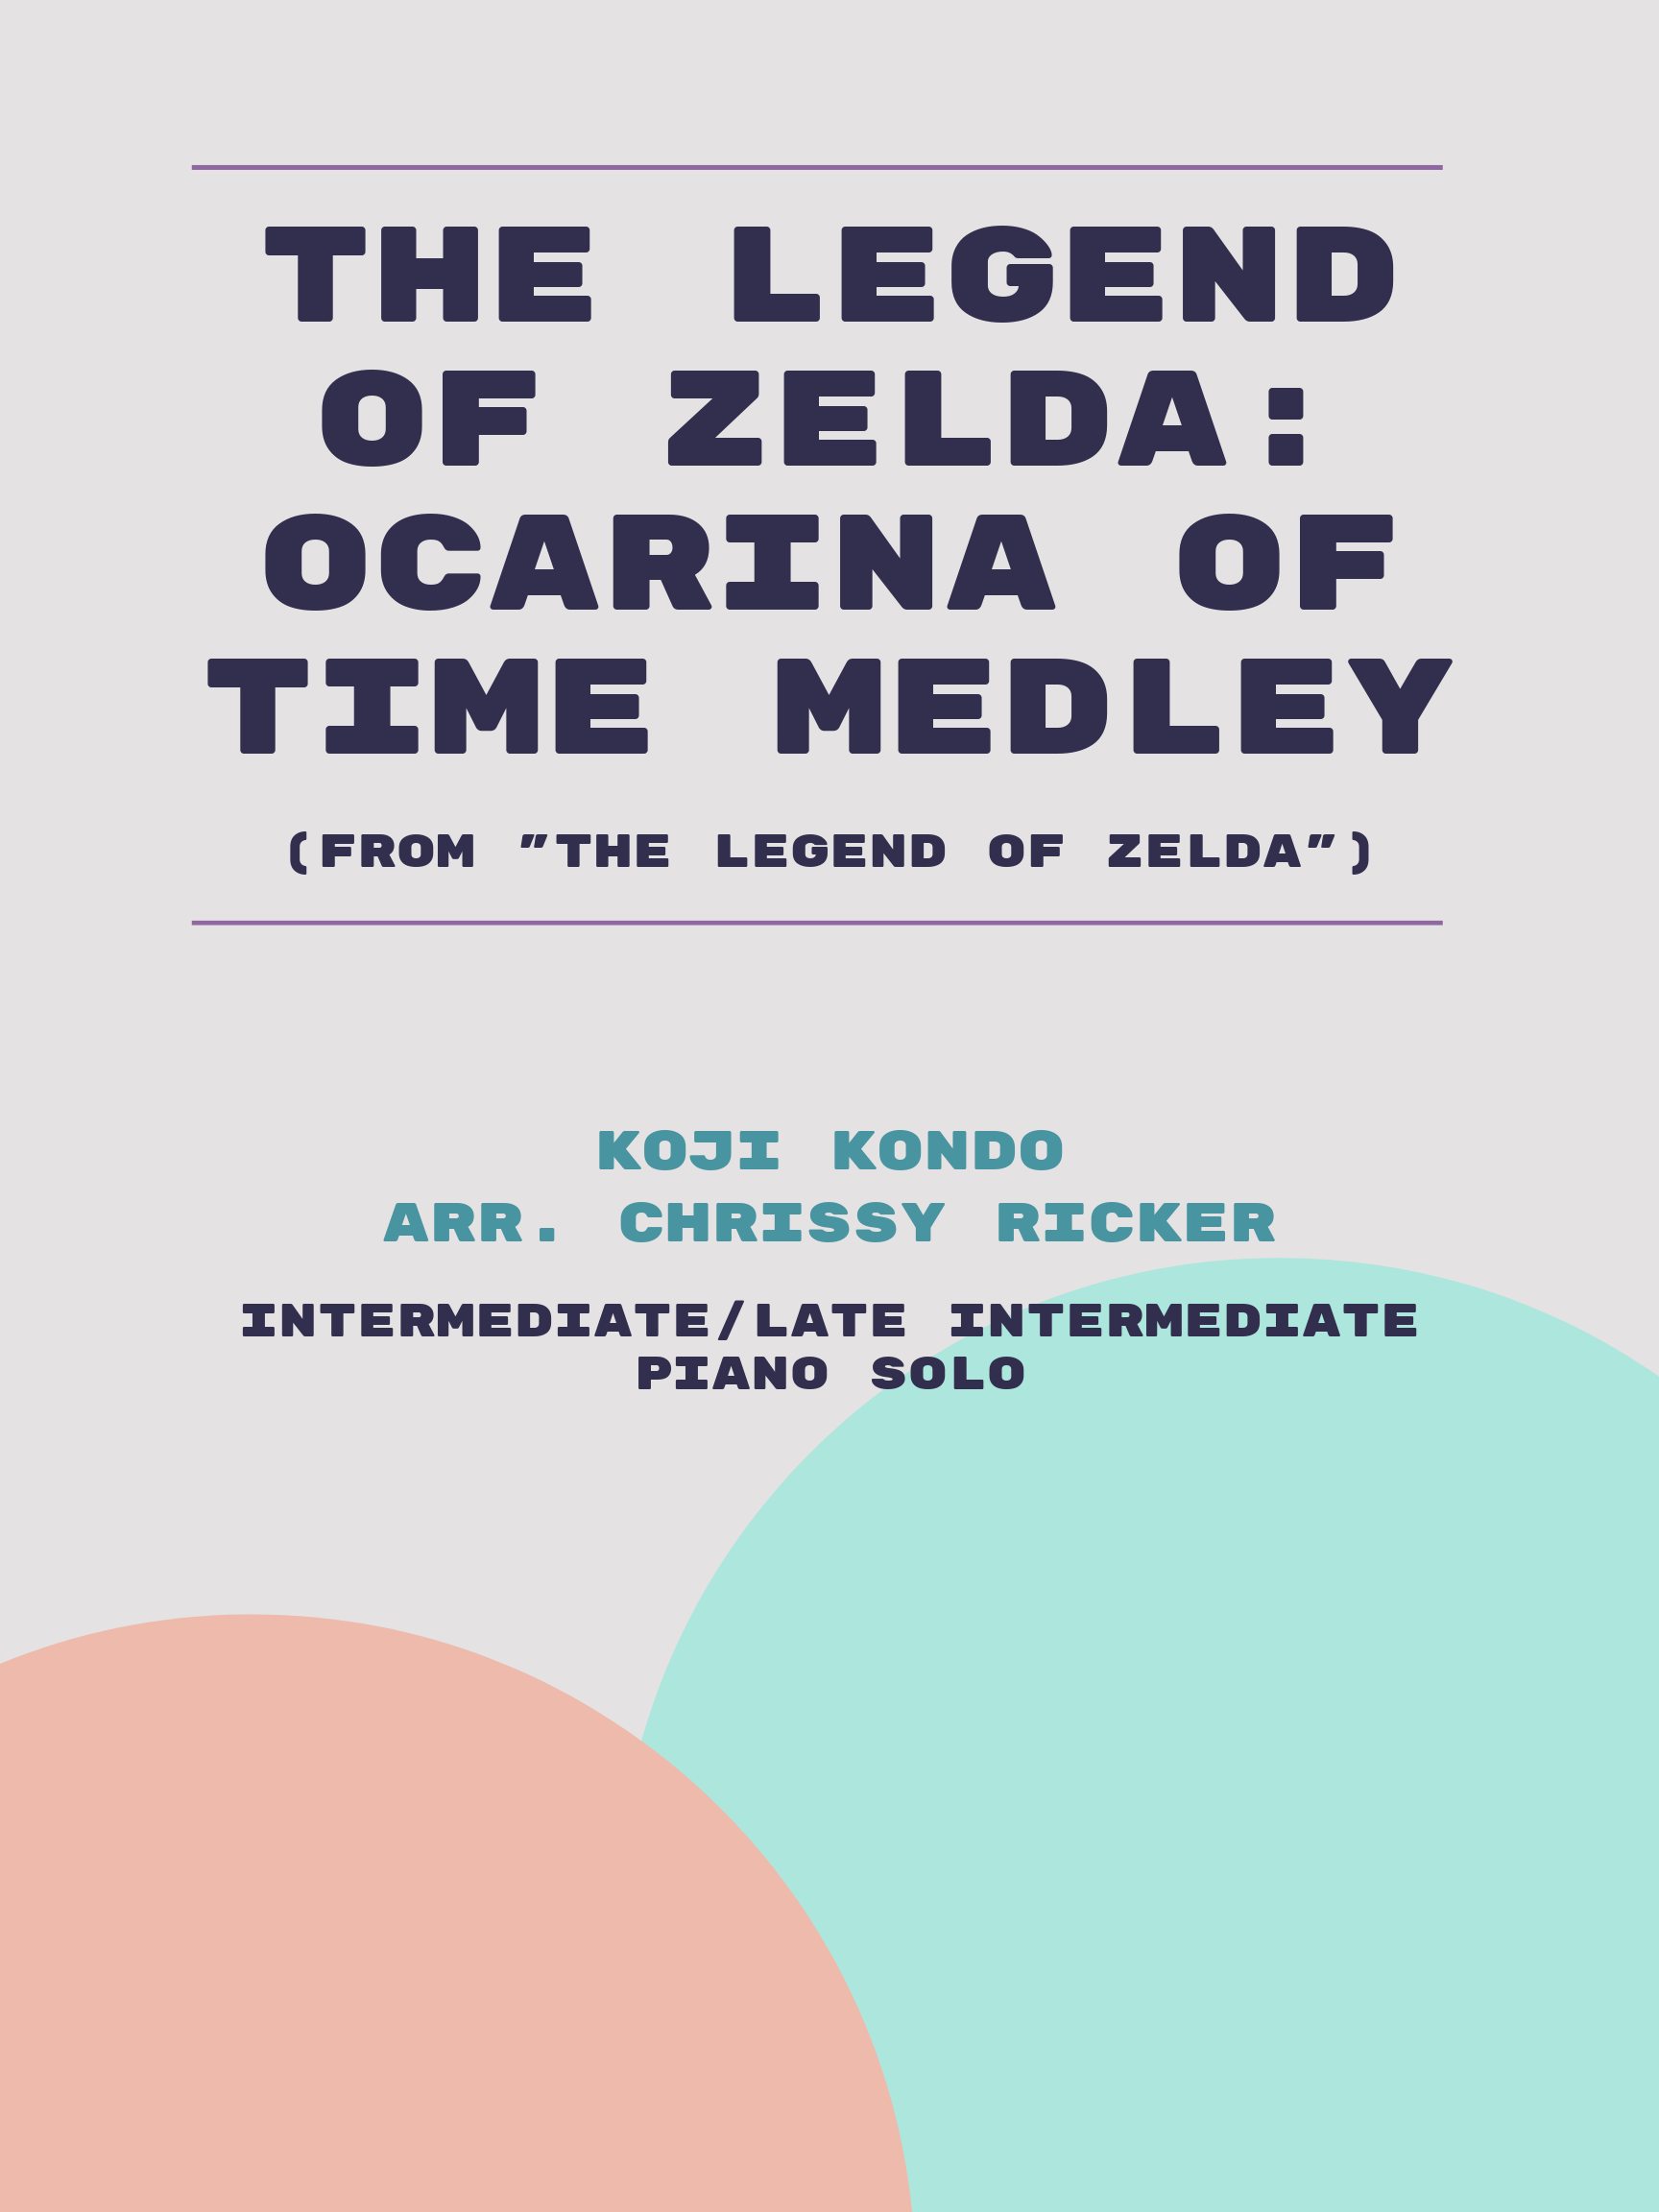 The Legend of Zelda: Ocarina of Time Medley by Koji Kondo